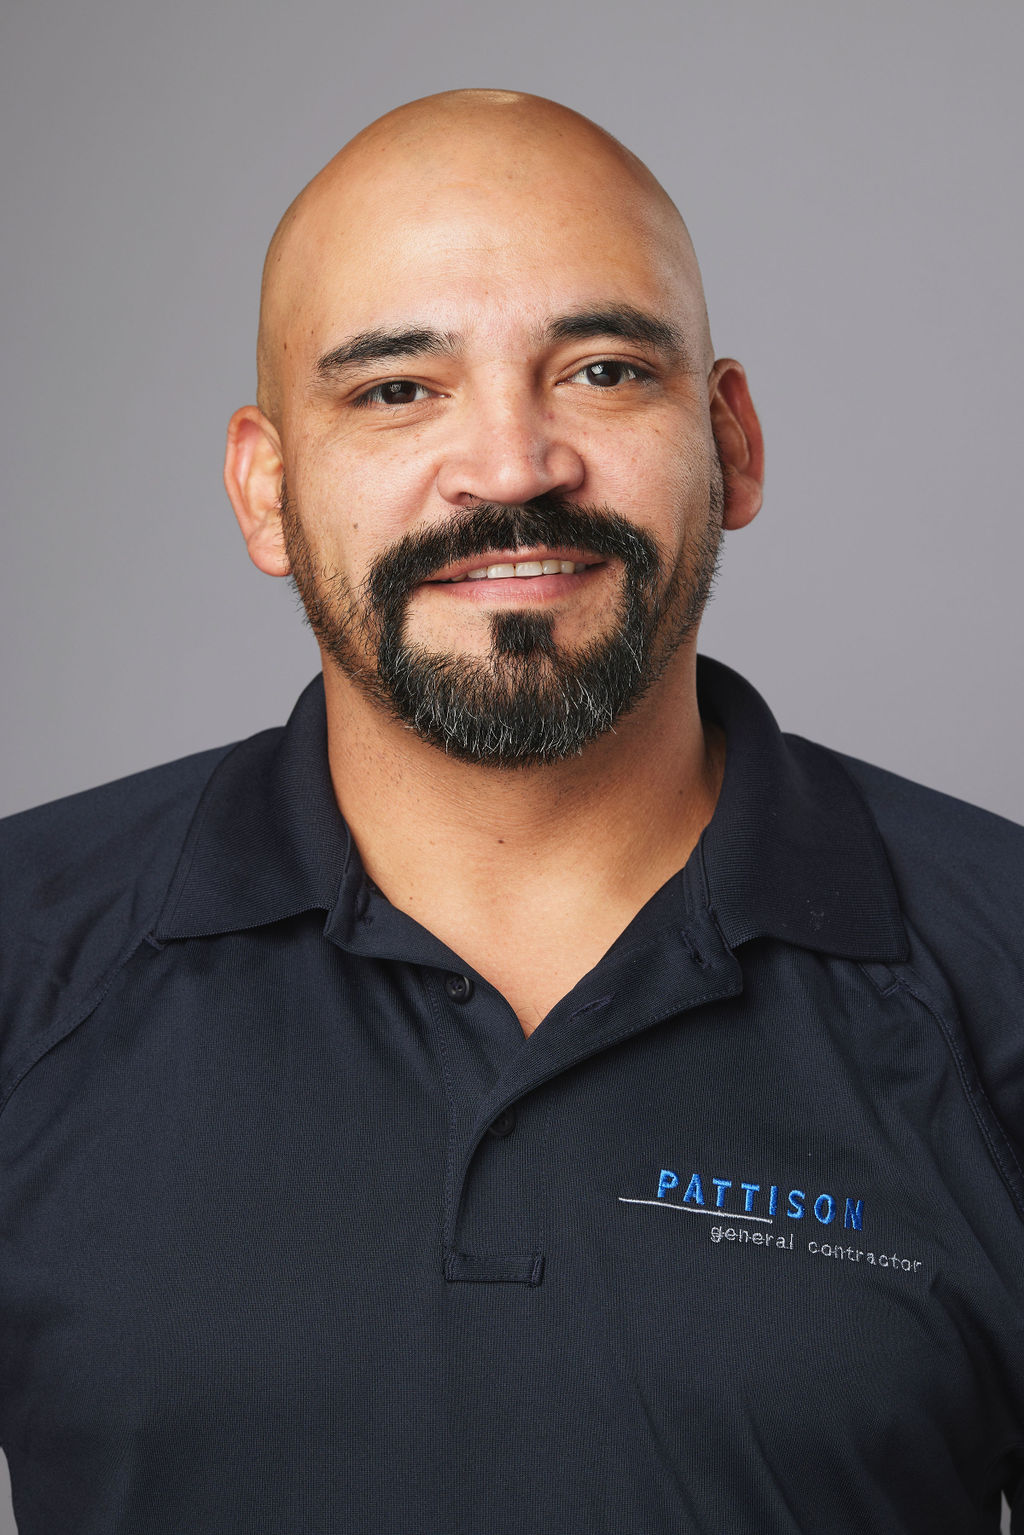 Rafael Diaz | Pattison Superintendent